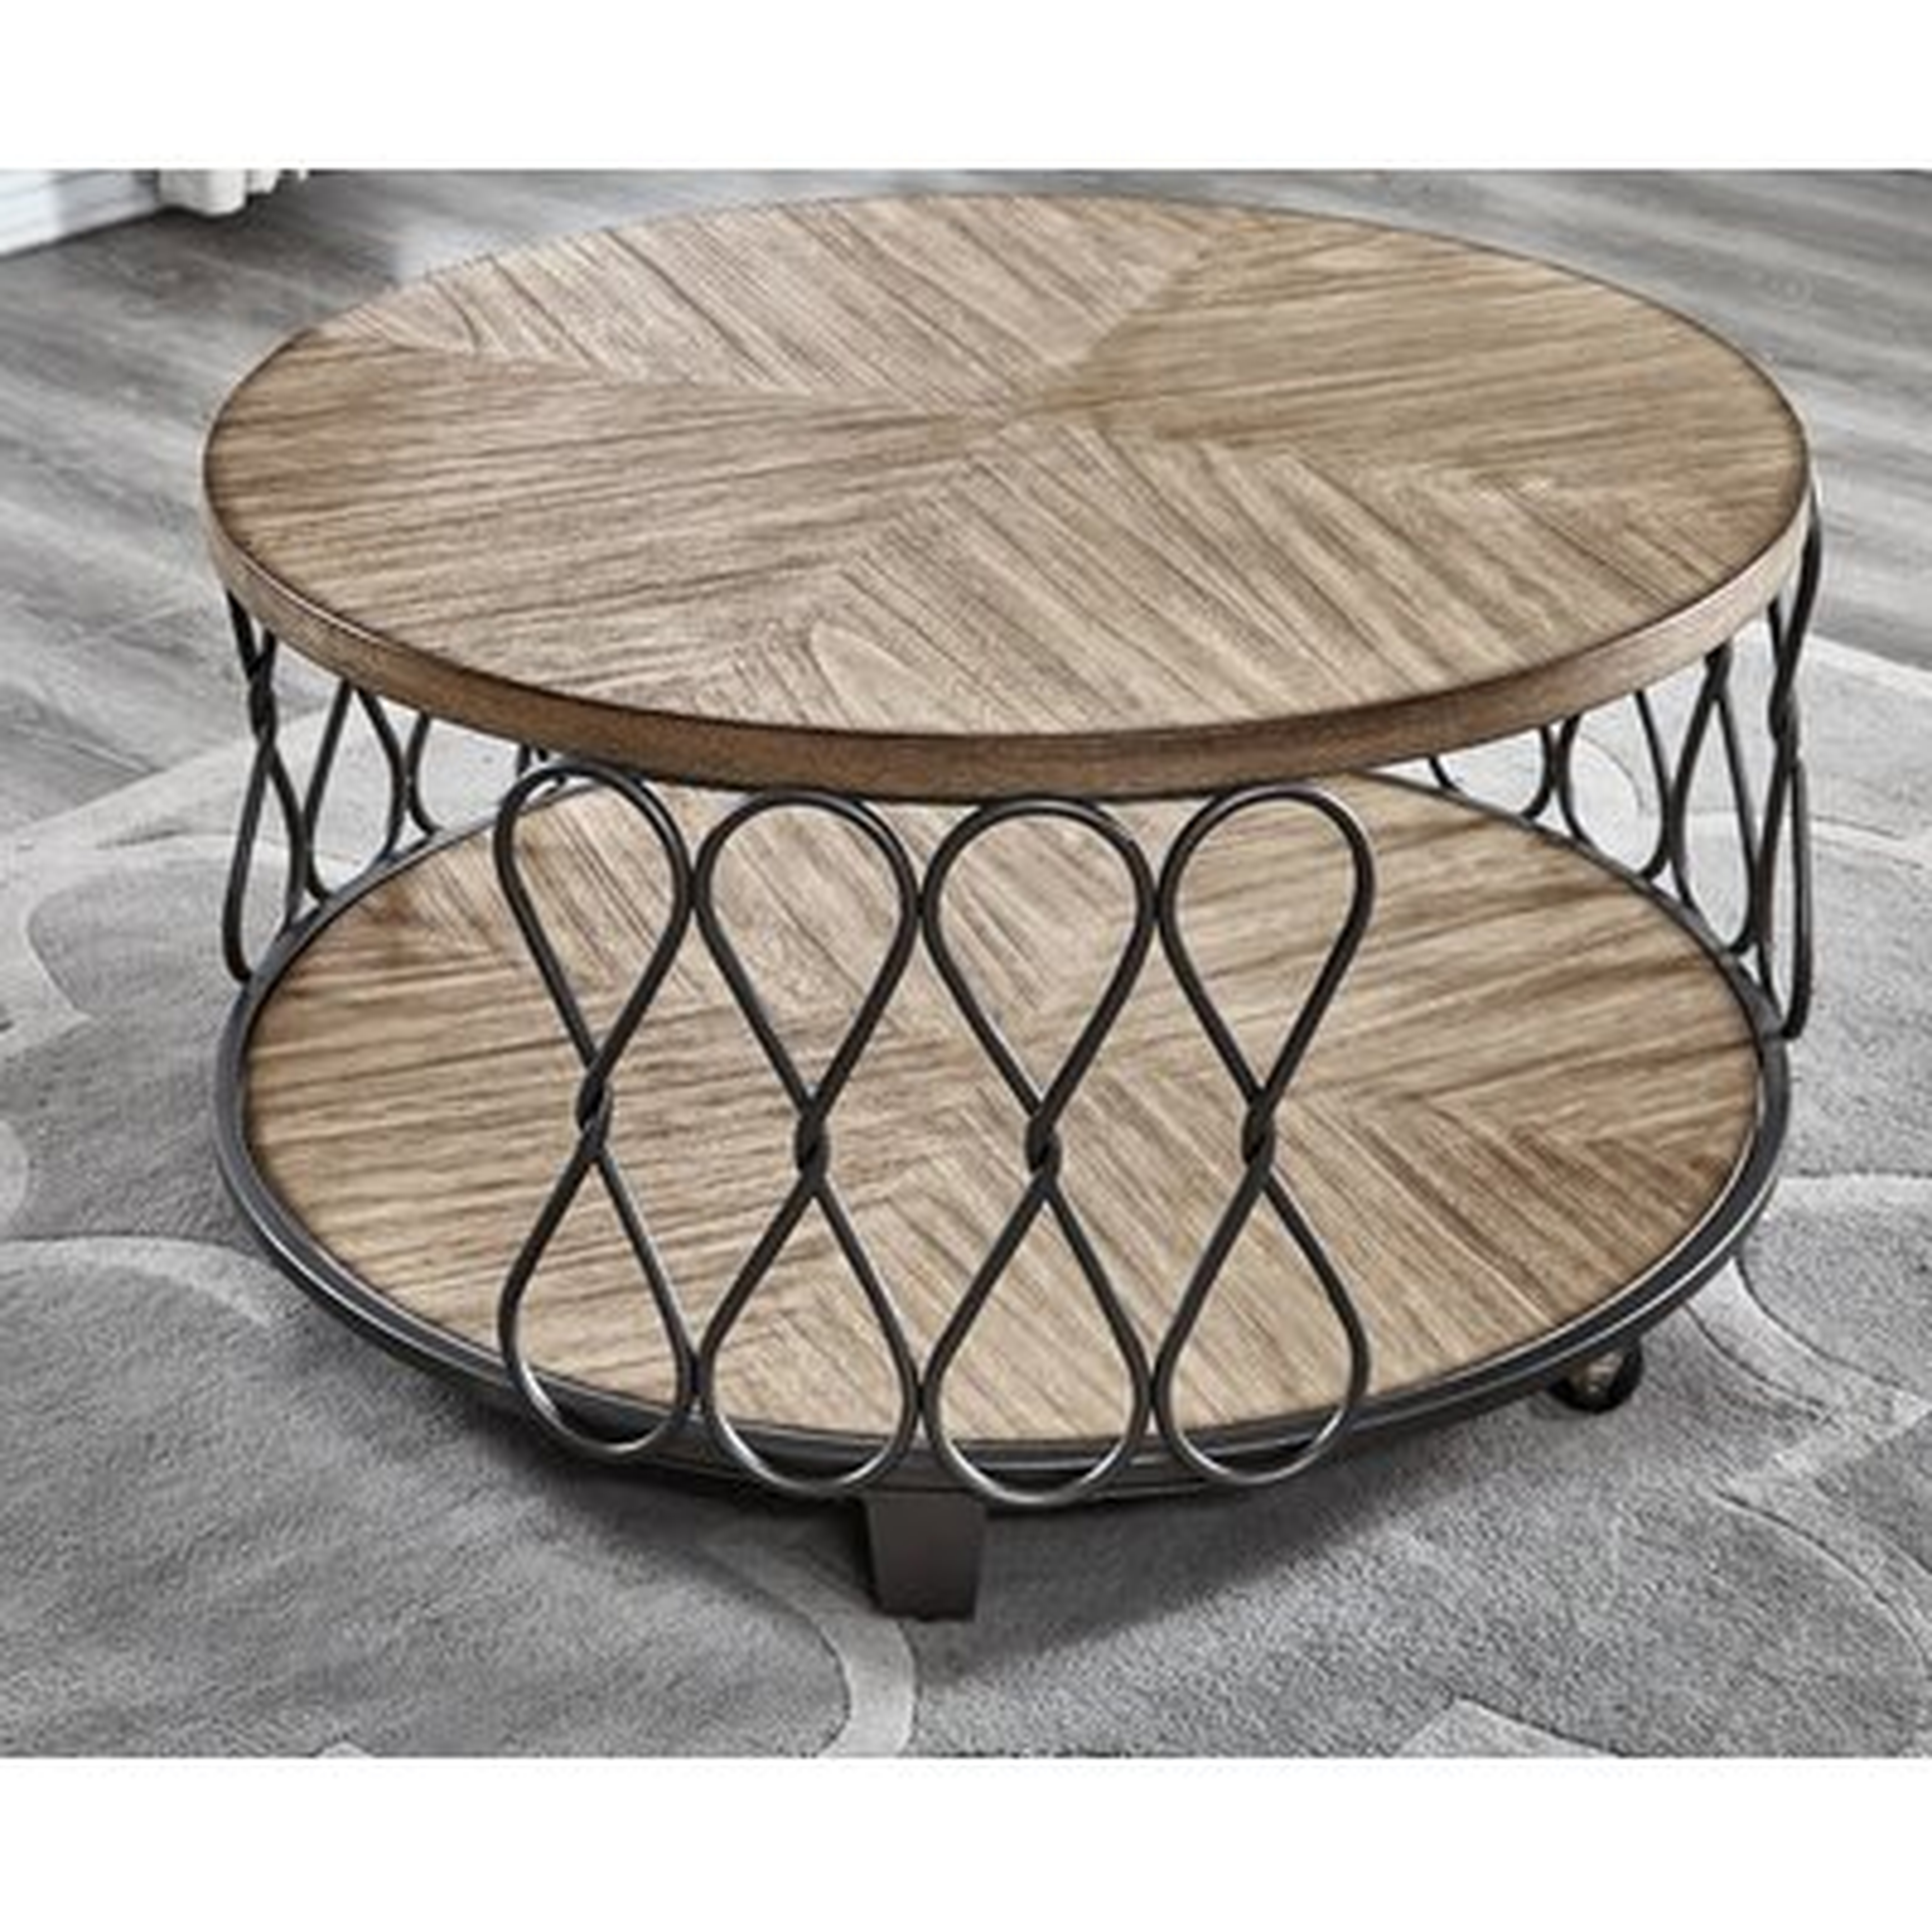 Aritzel Drum Coffee Table with Storage - Wayfair